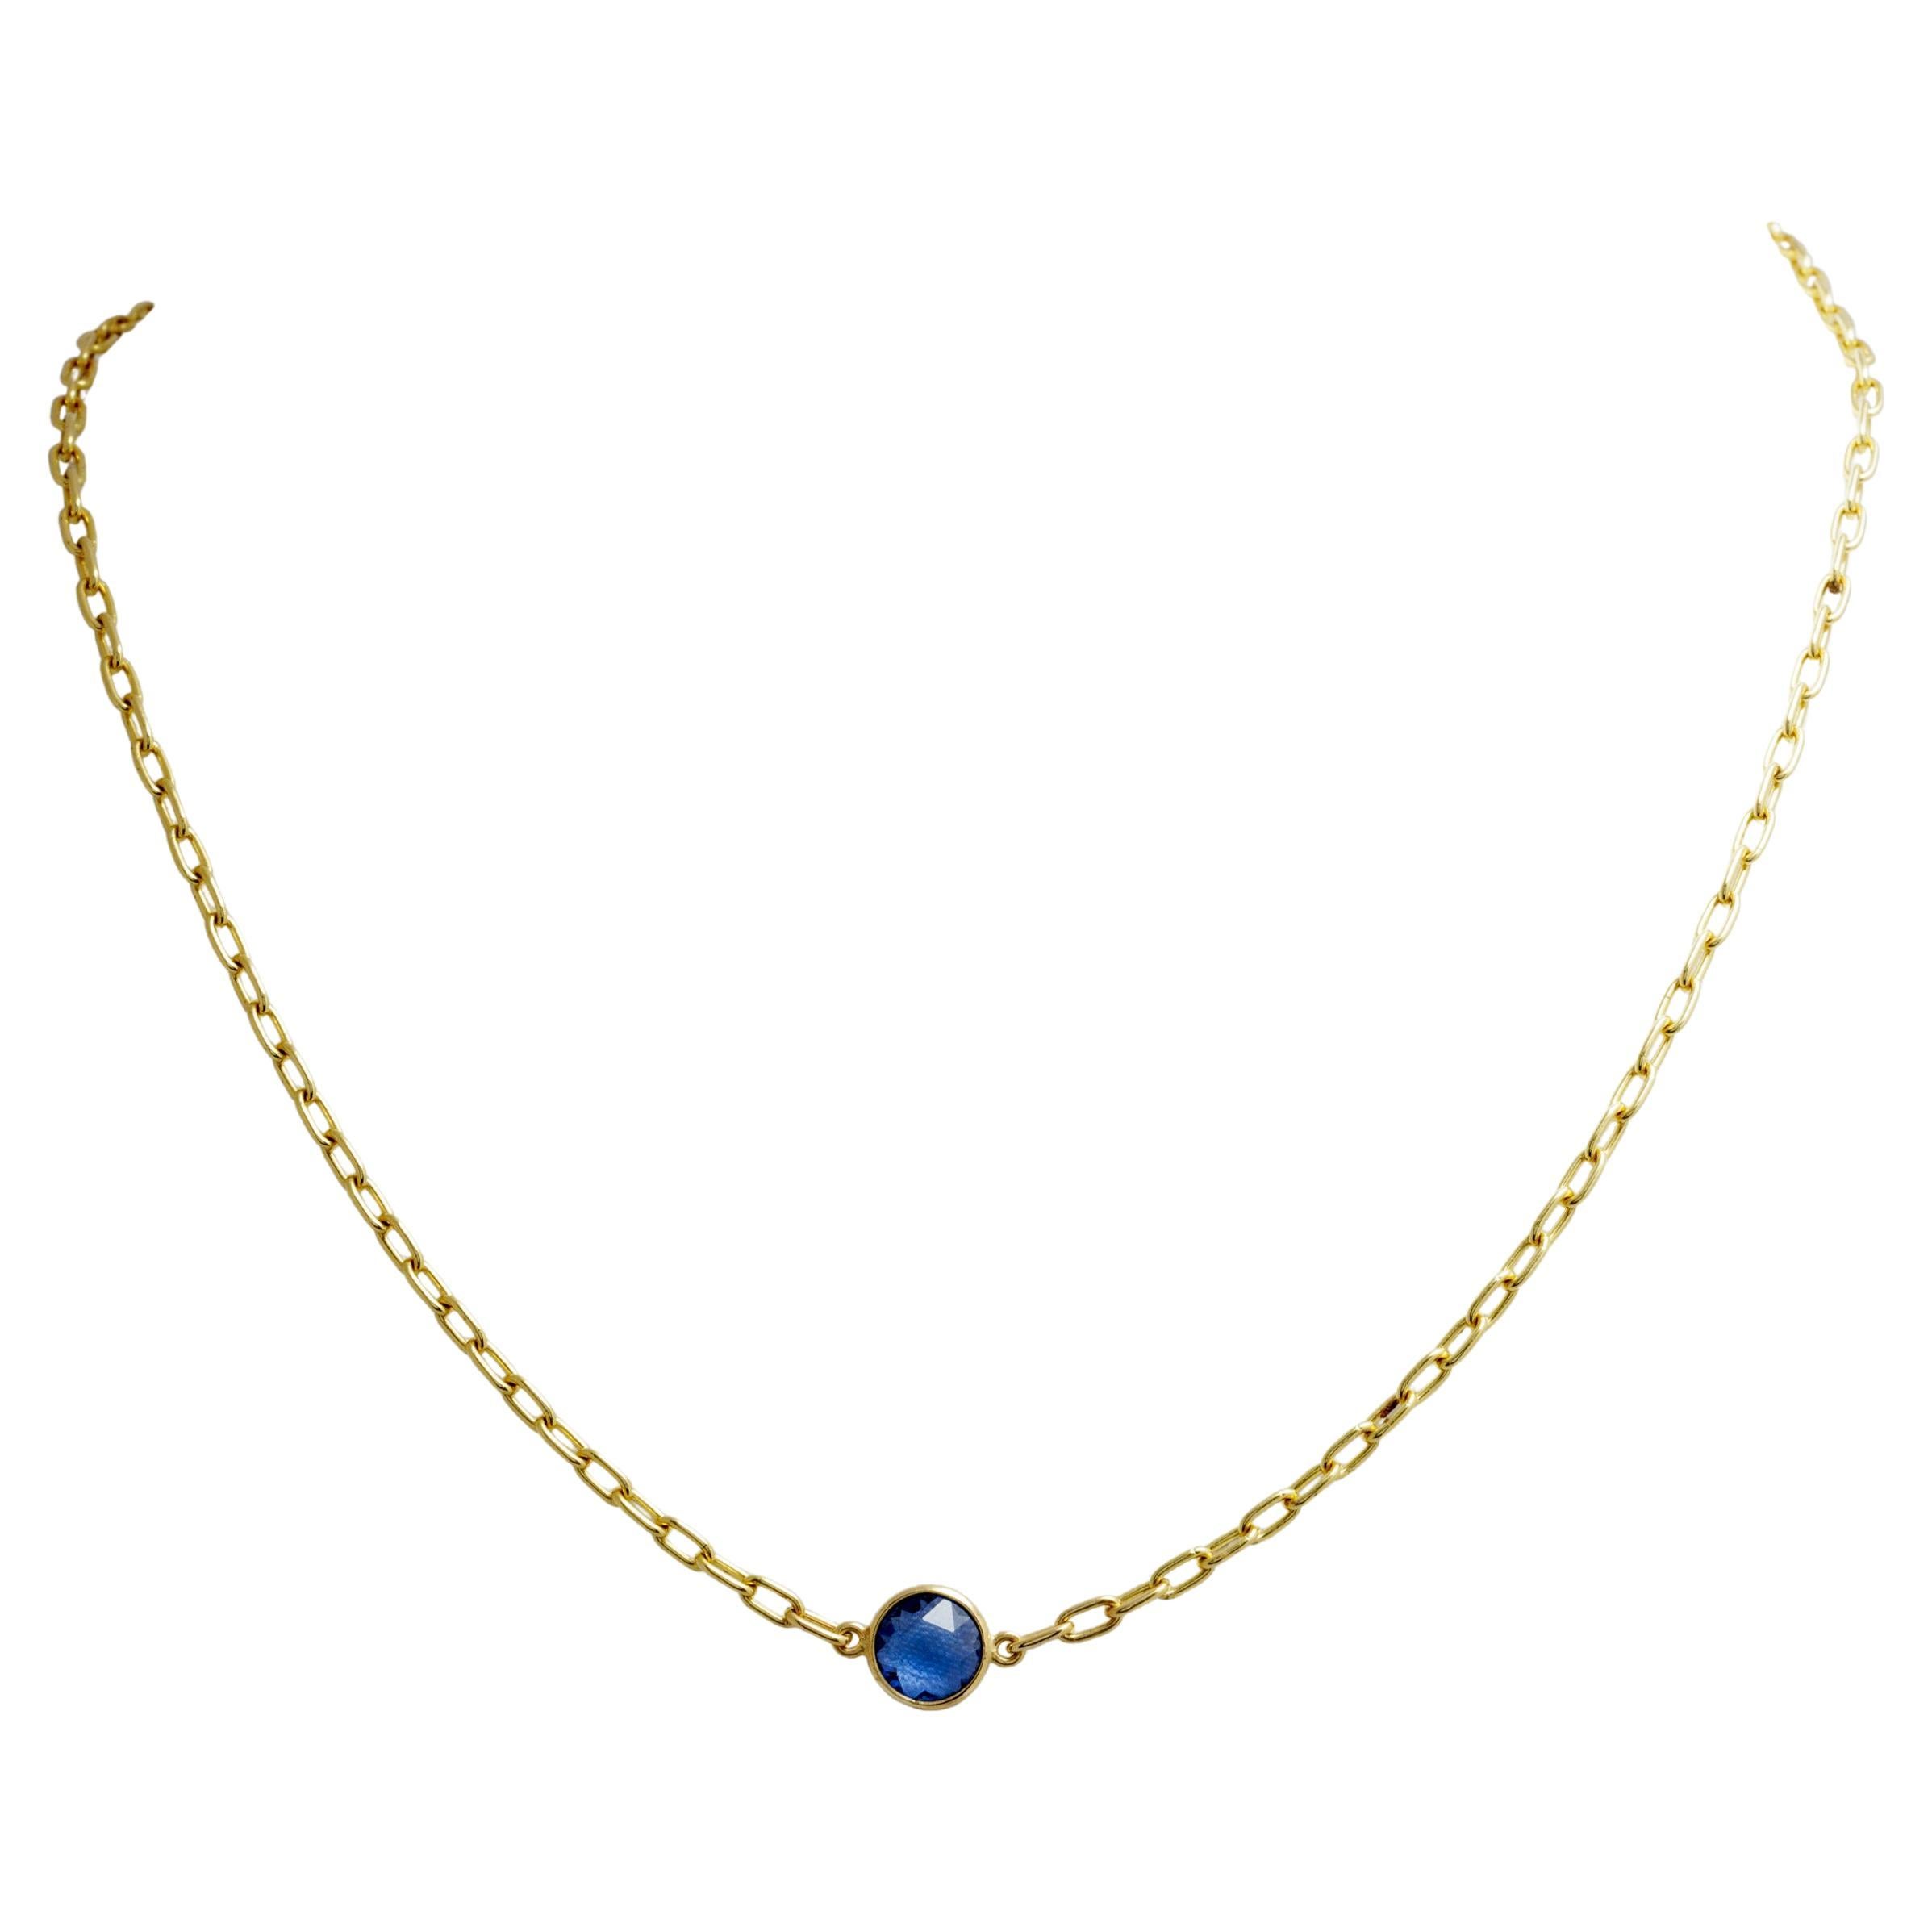 18 Karat Yellow Gold and a 0.90 Carat Ceylon Sapphire Chain Necklace